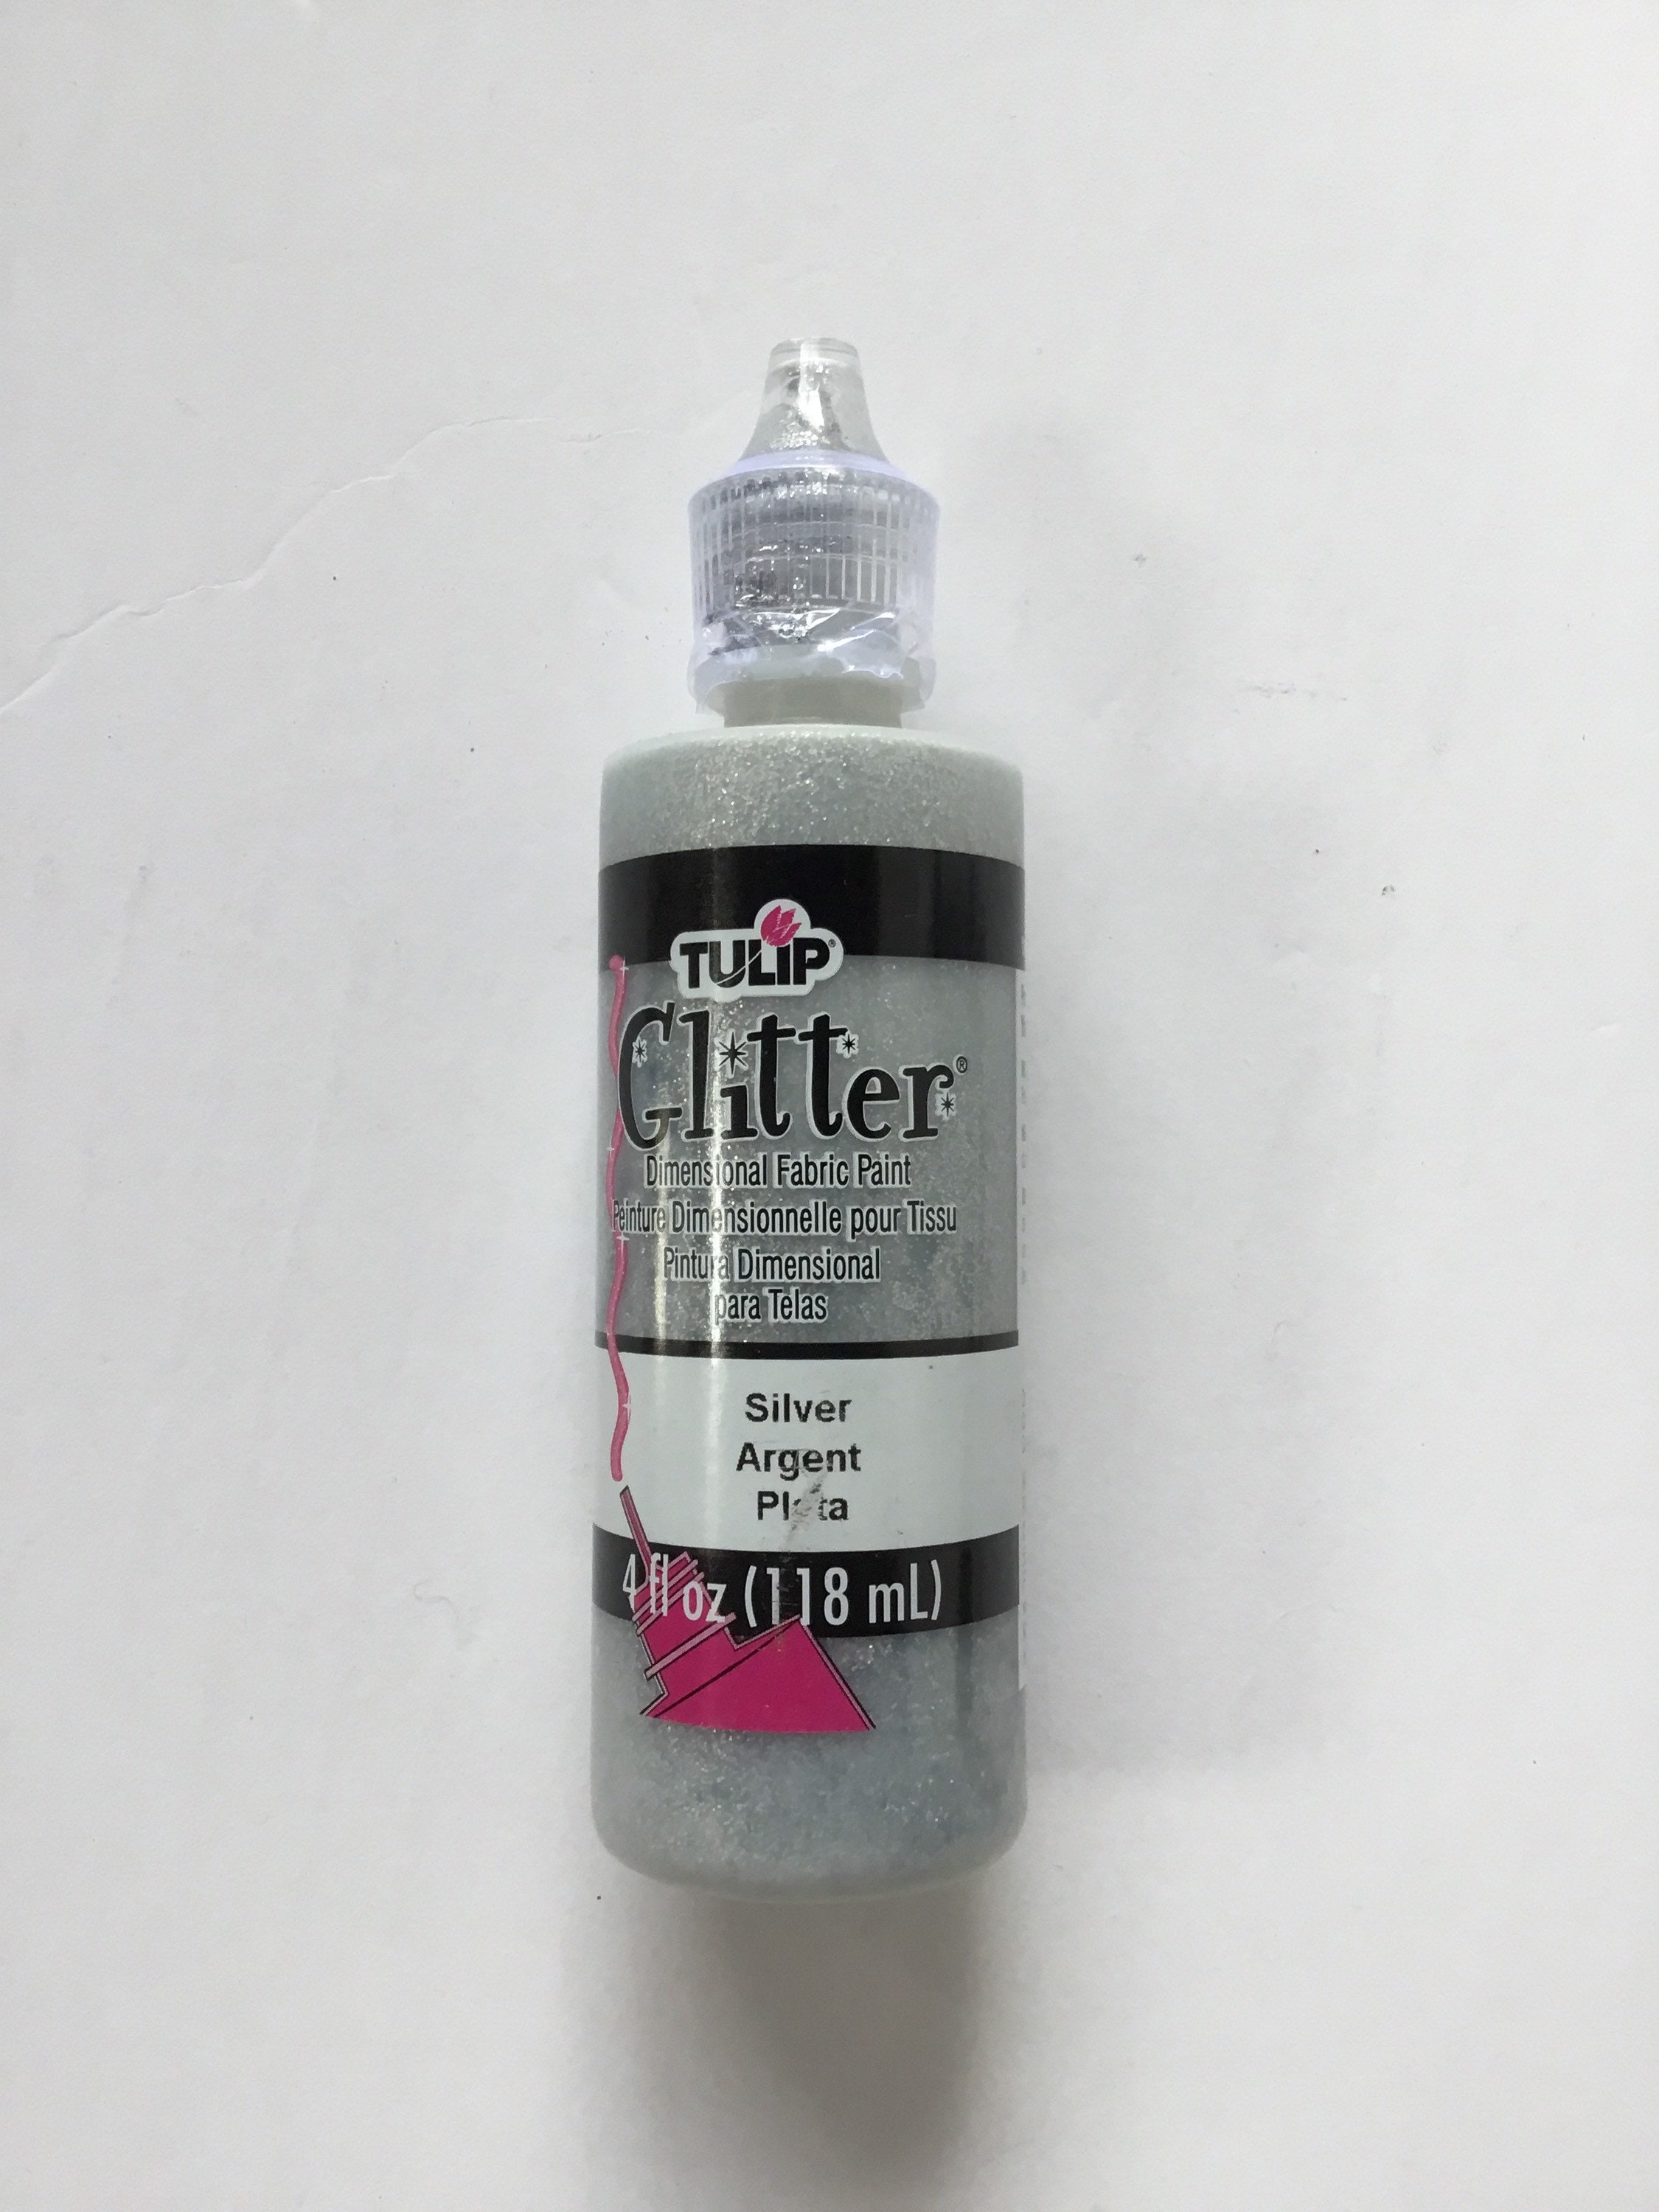 Tulip Glitter Dimensional Fabric Paint 4 fl oz/118 ml -Silver